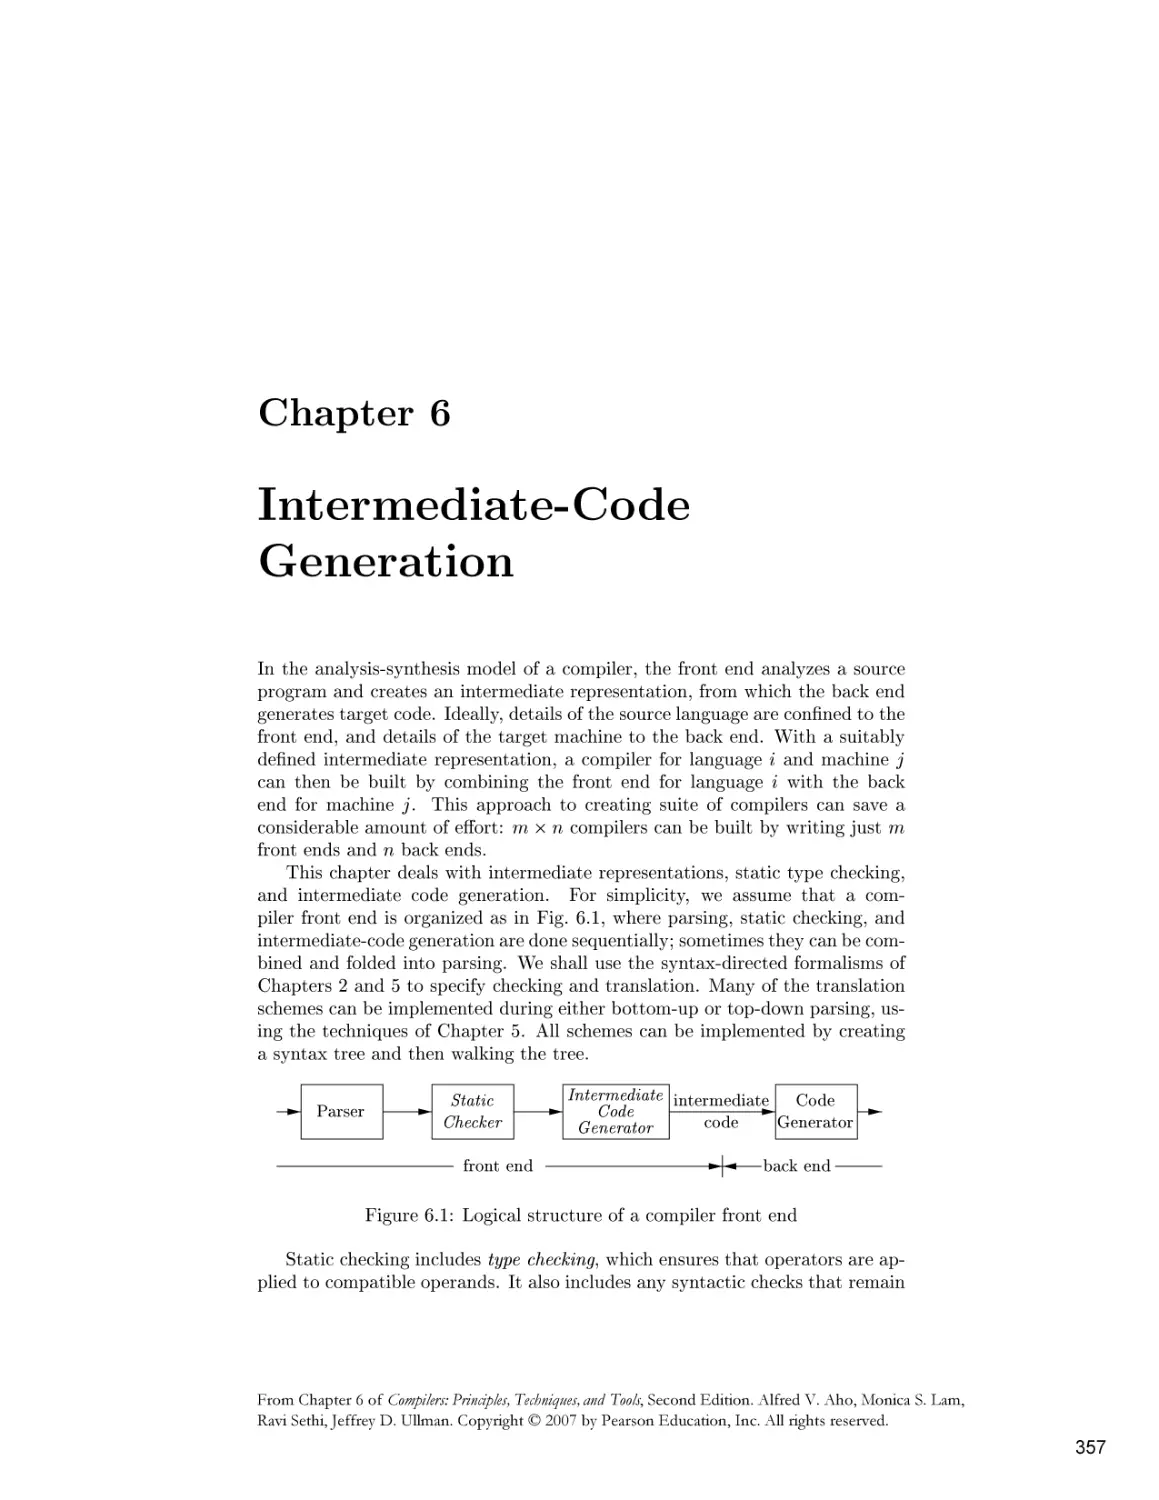 Chapter 6. Intermediate-Code Generation